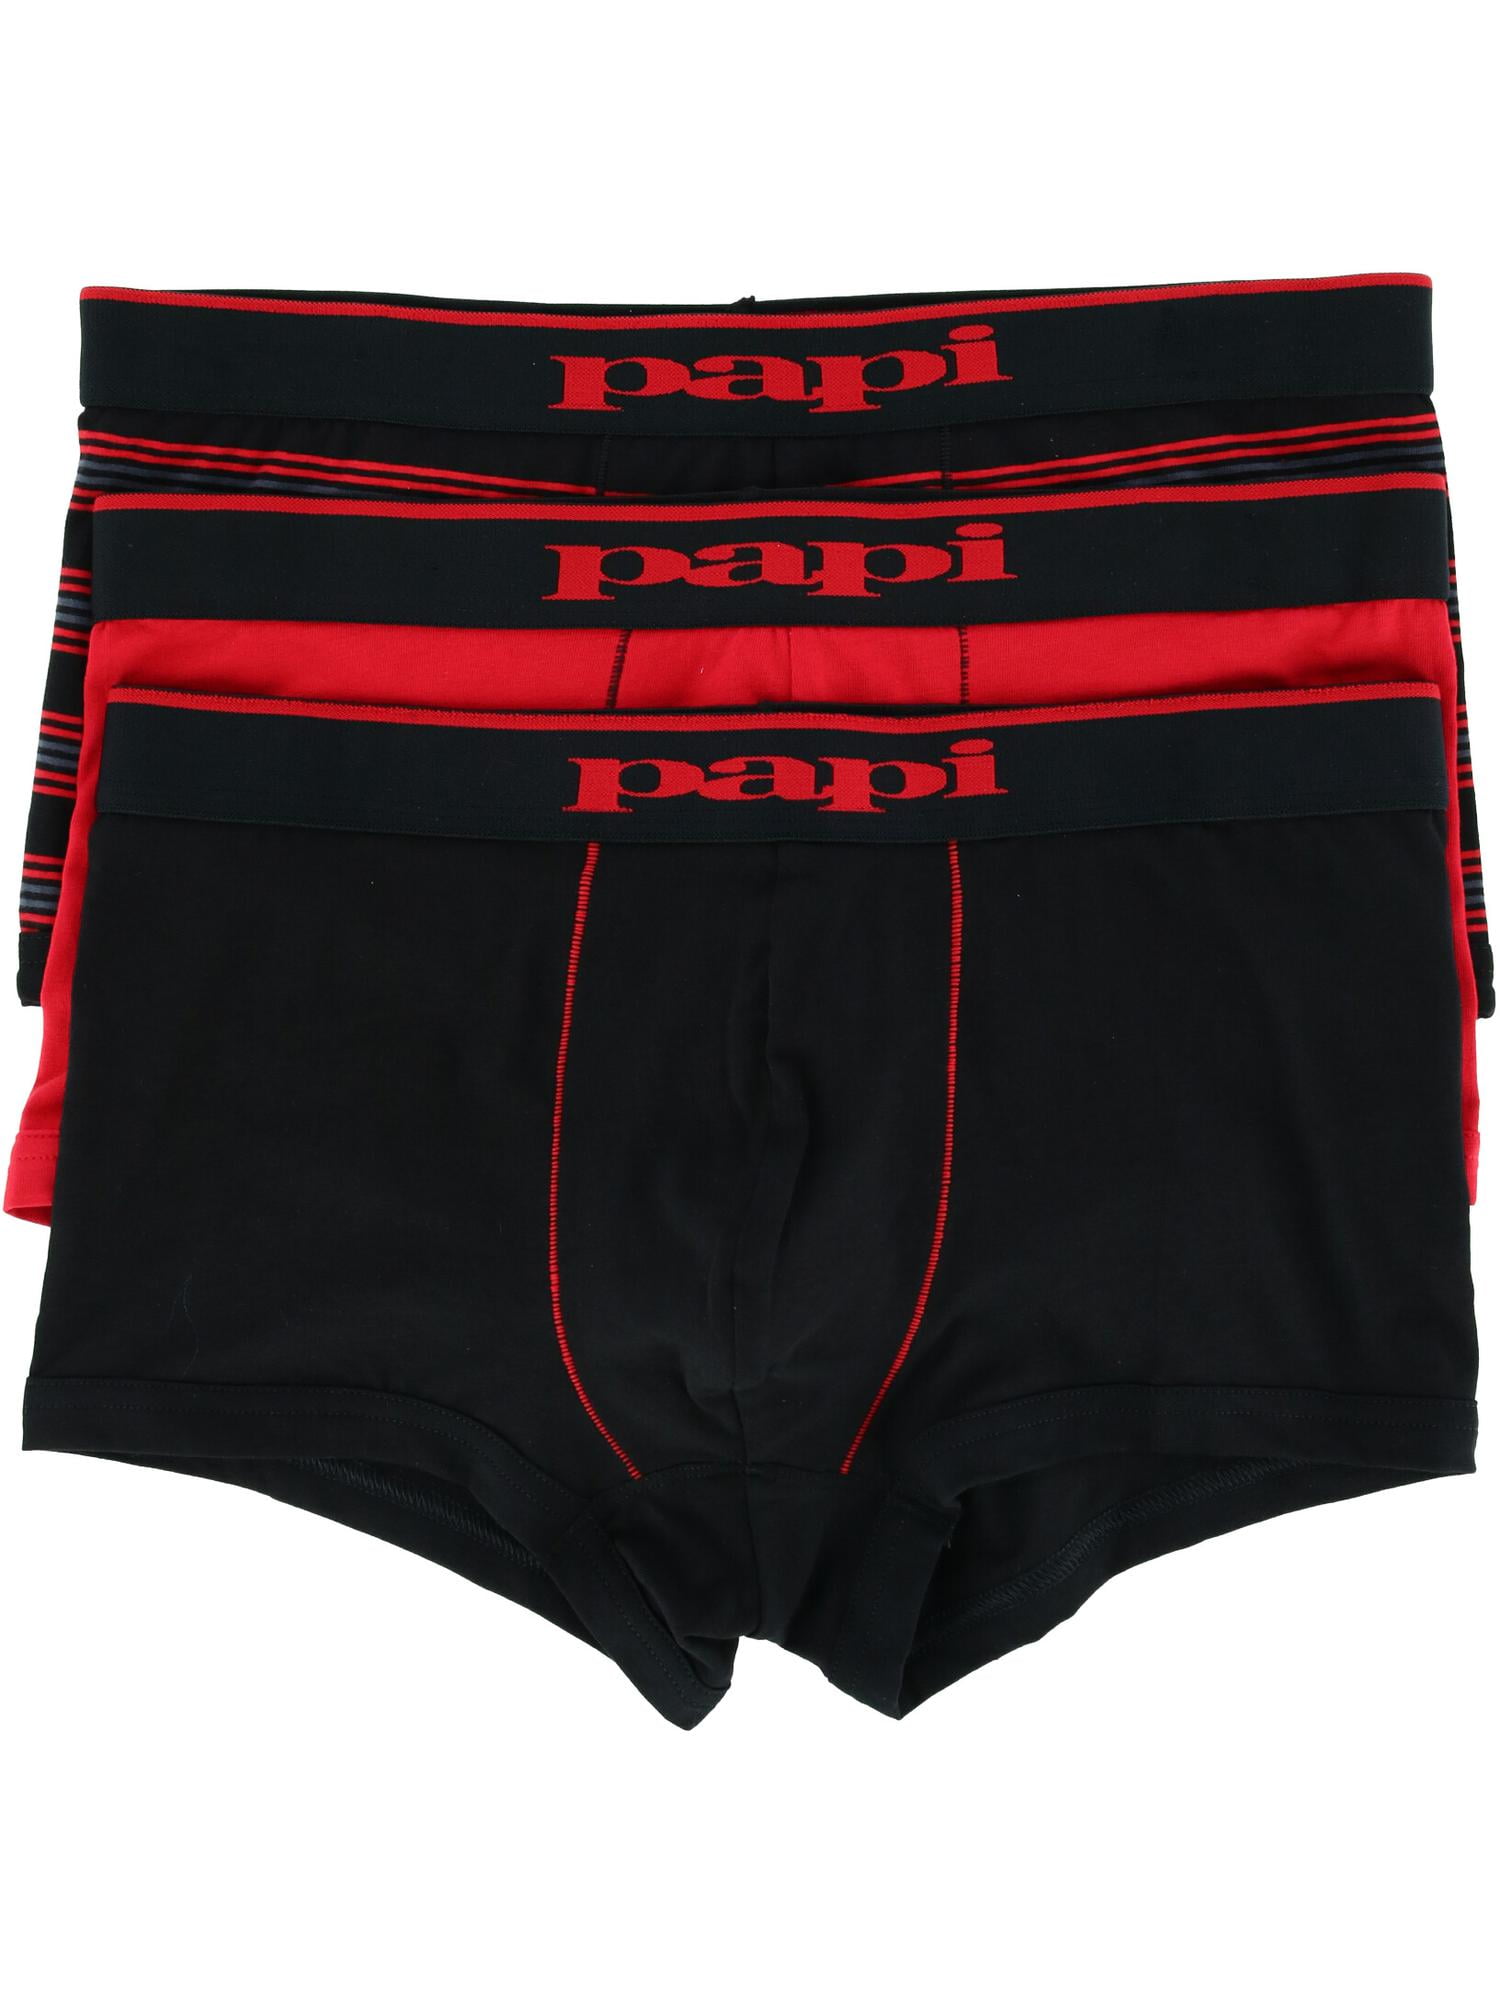 3 Pack New Papi Men's Brazilian Cut Stripe and Solid Underwear Trunks